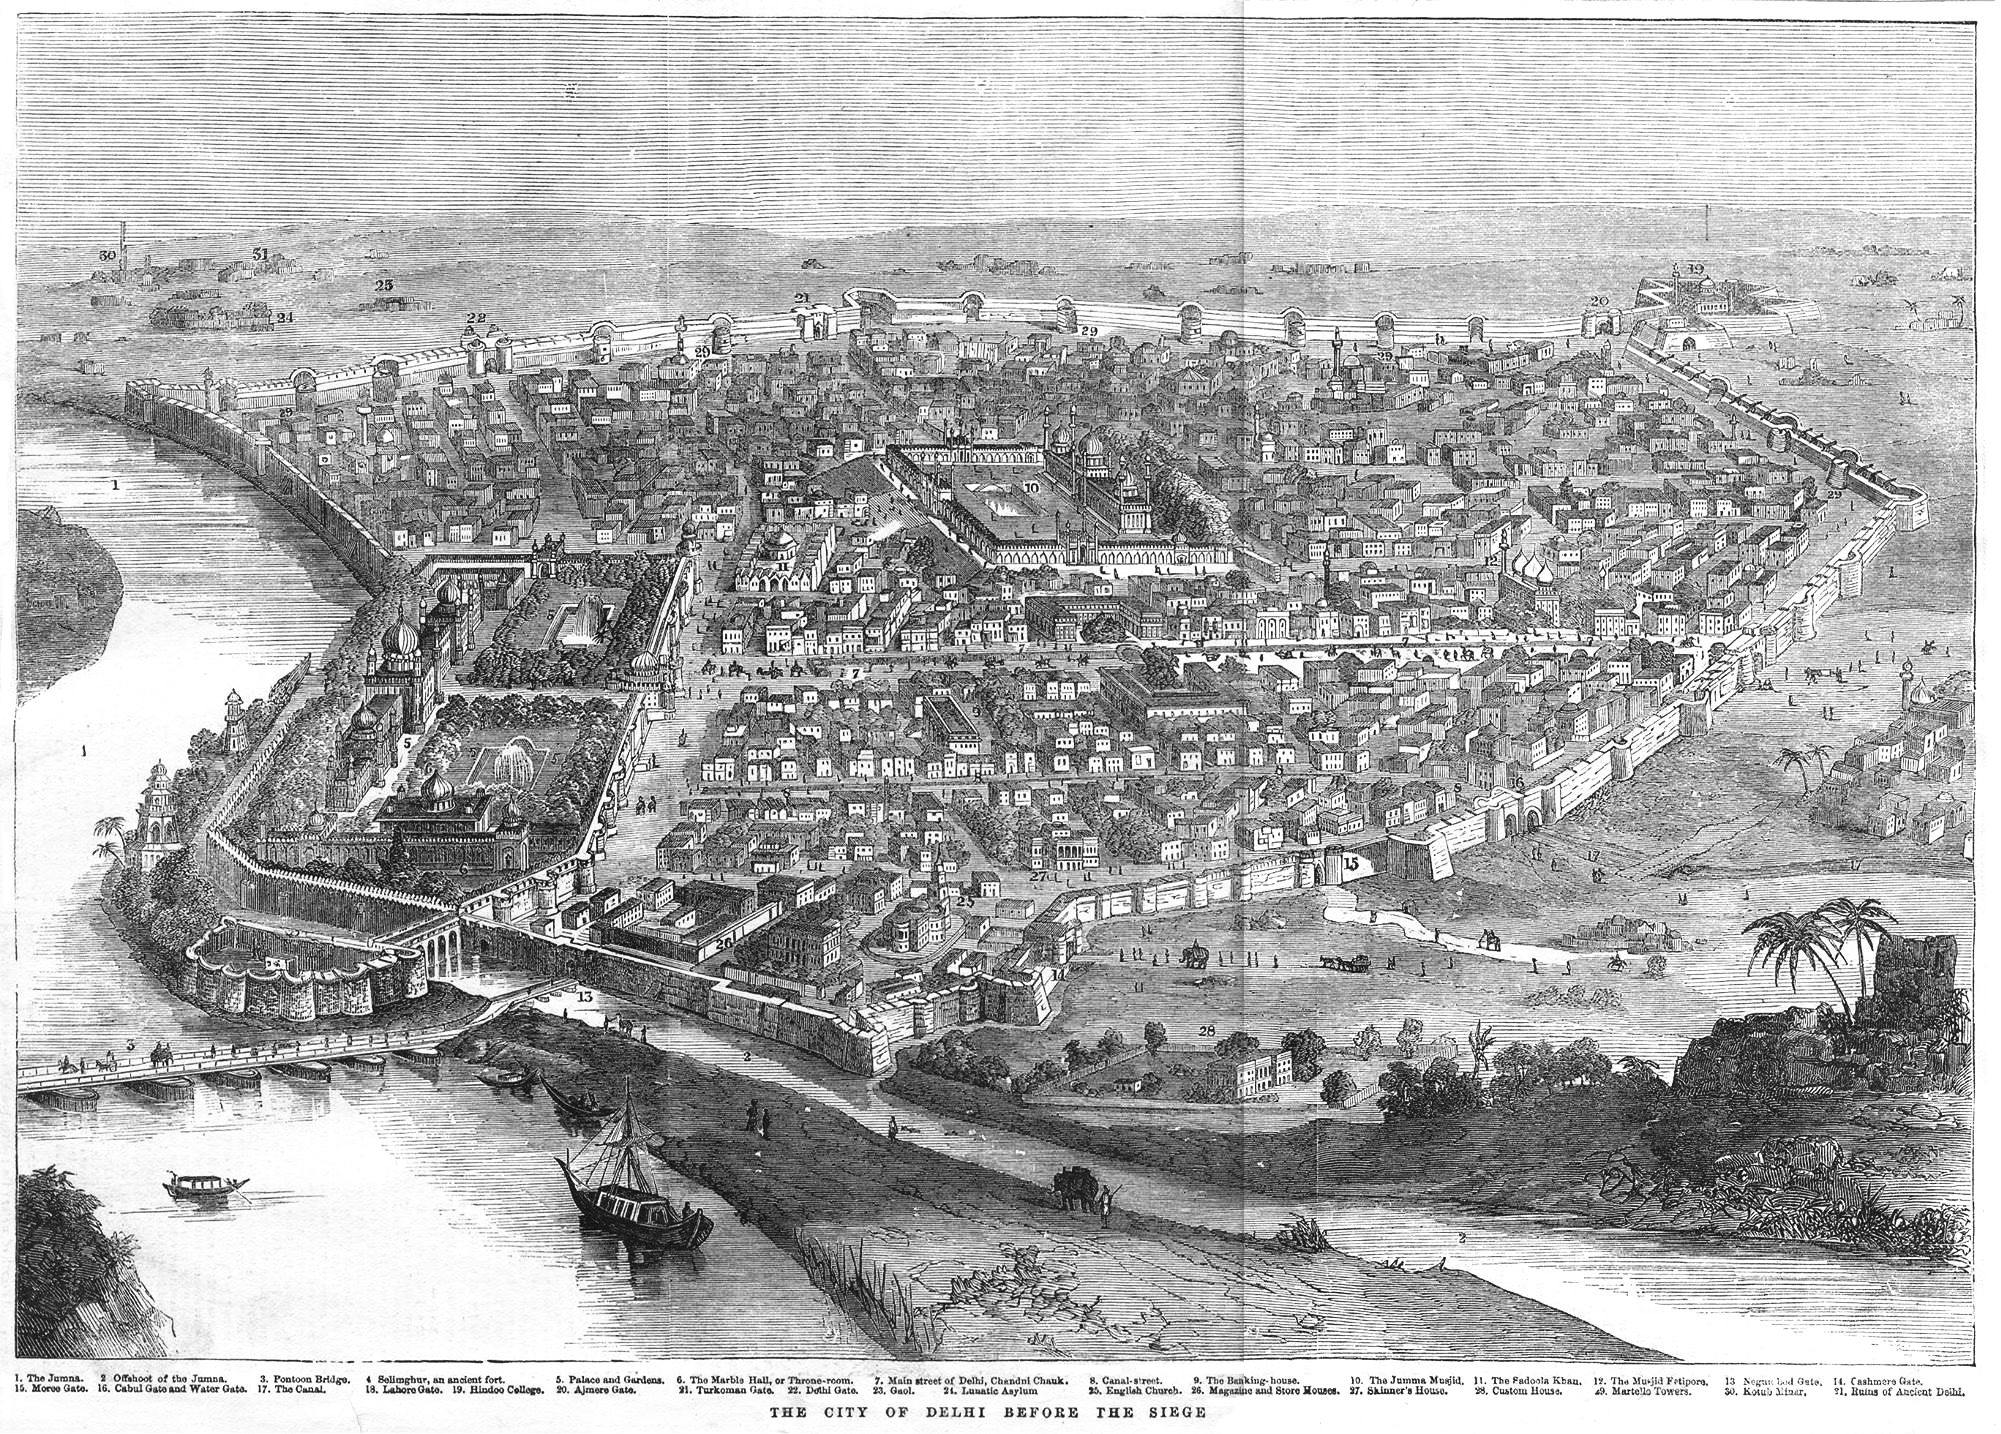 1857 Panorama of Delhi City